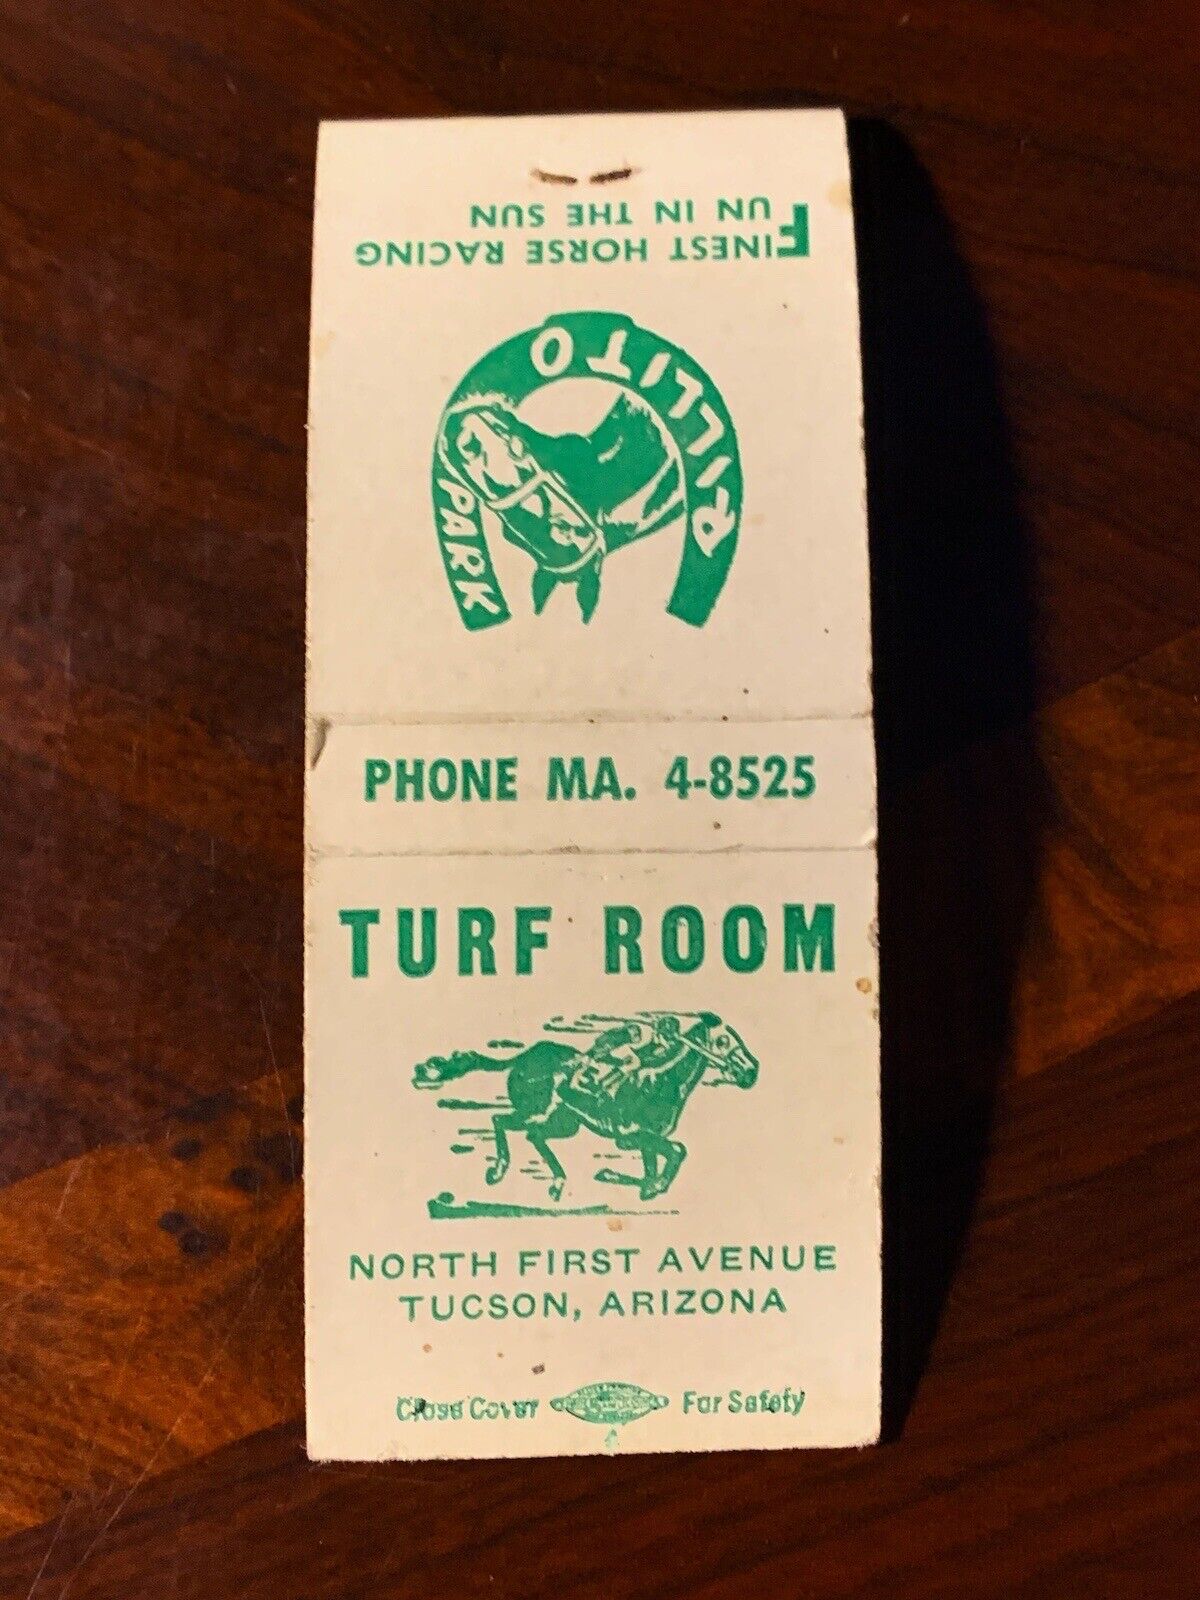 TURF ROOM Tucson Arizona Rillito Park Horse Racing Historic Matchbook Cover ~